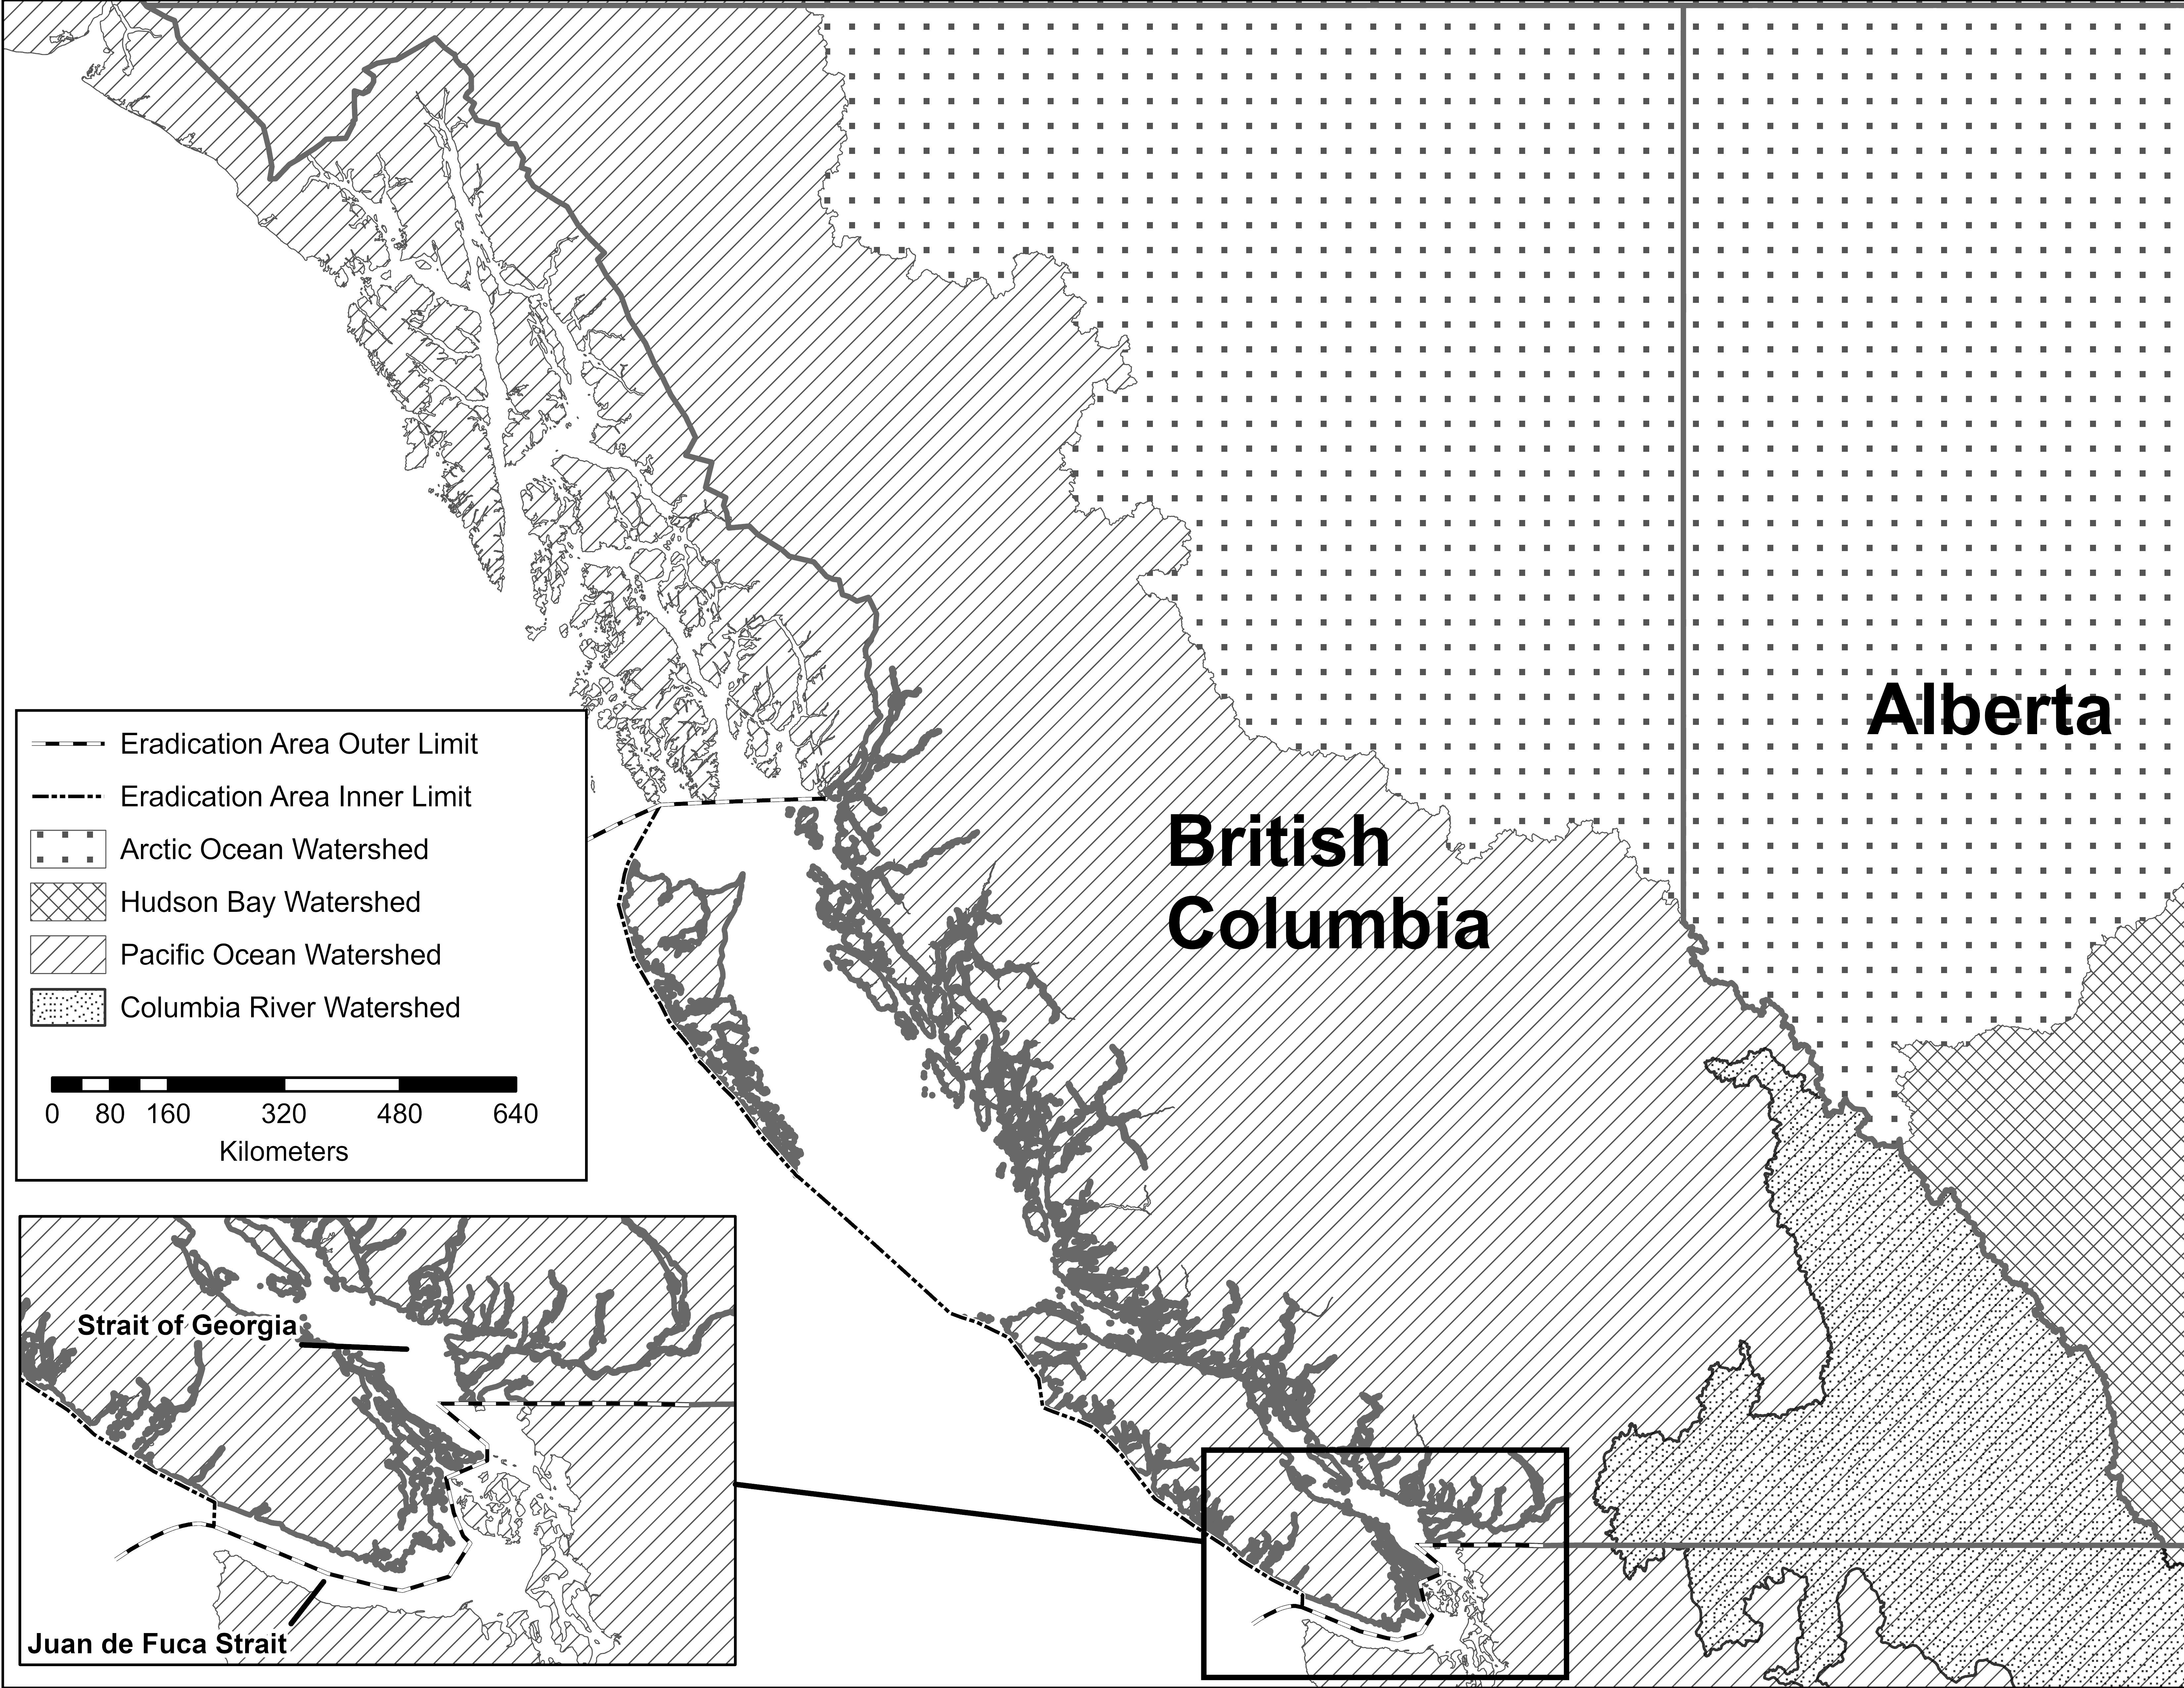 British Columbia map. Description follows.